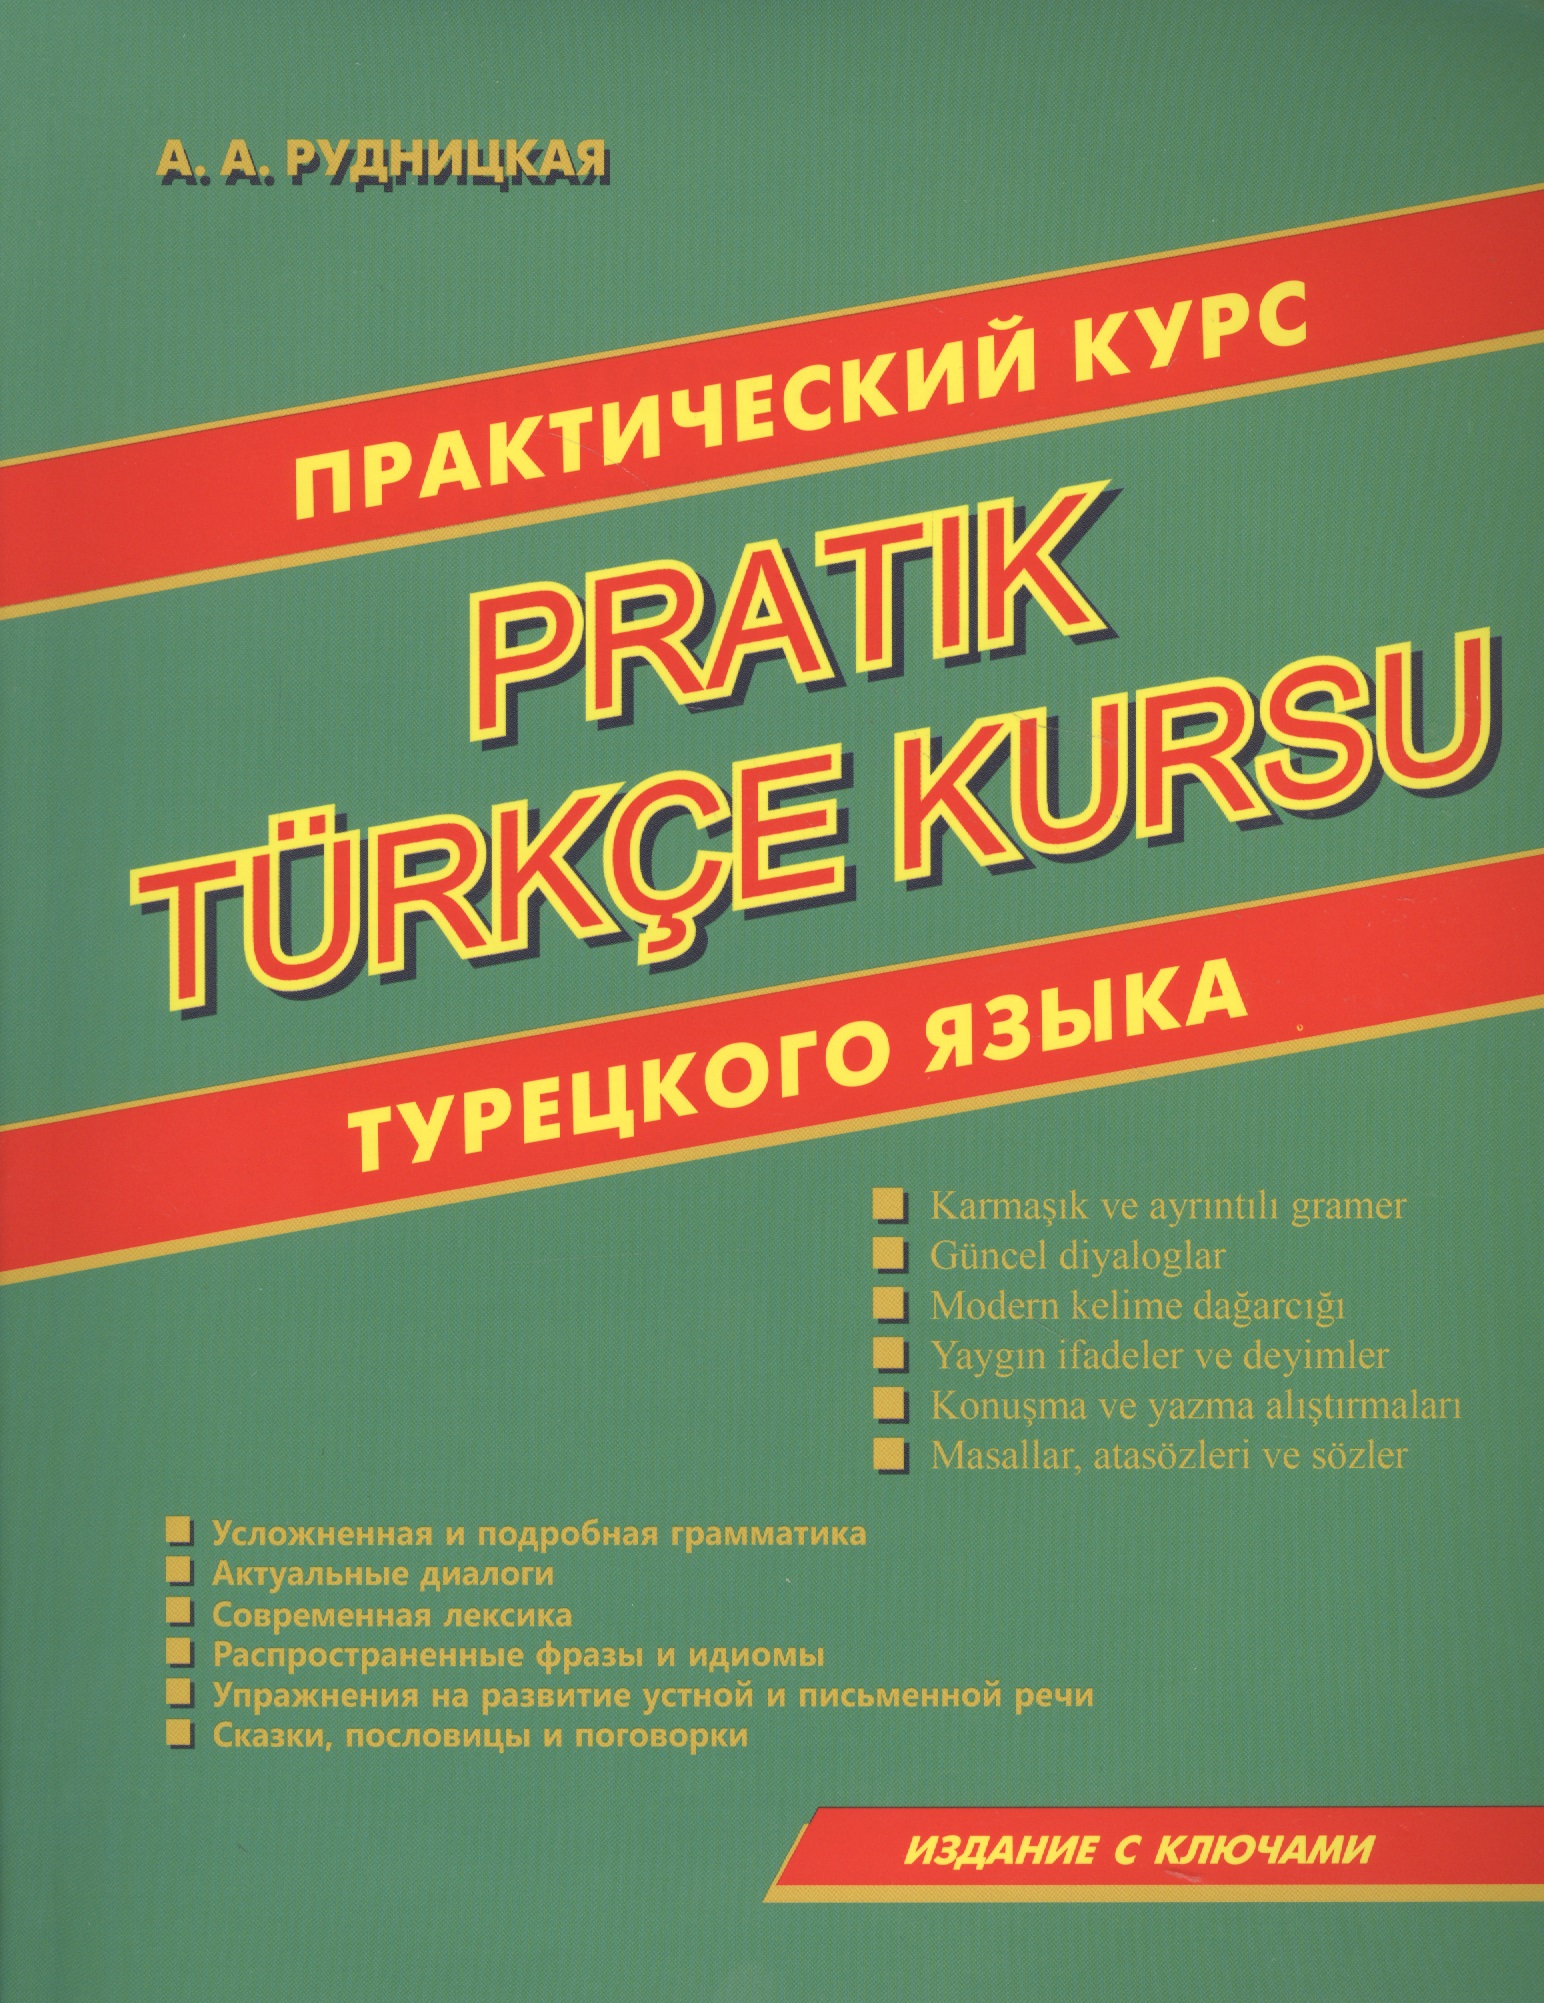 Практический курс турецкого языка практический курс турецкого языка рудницкая а а